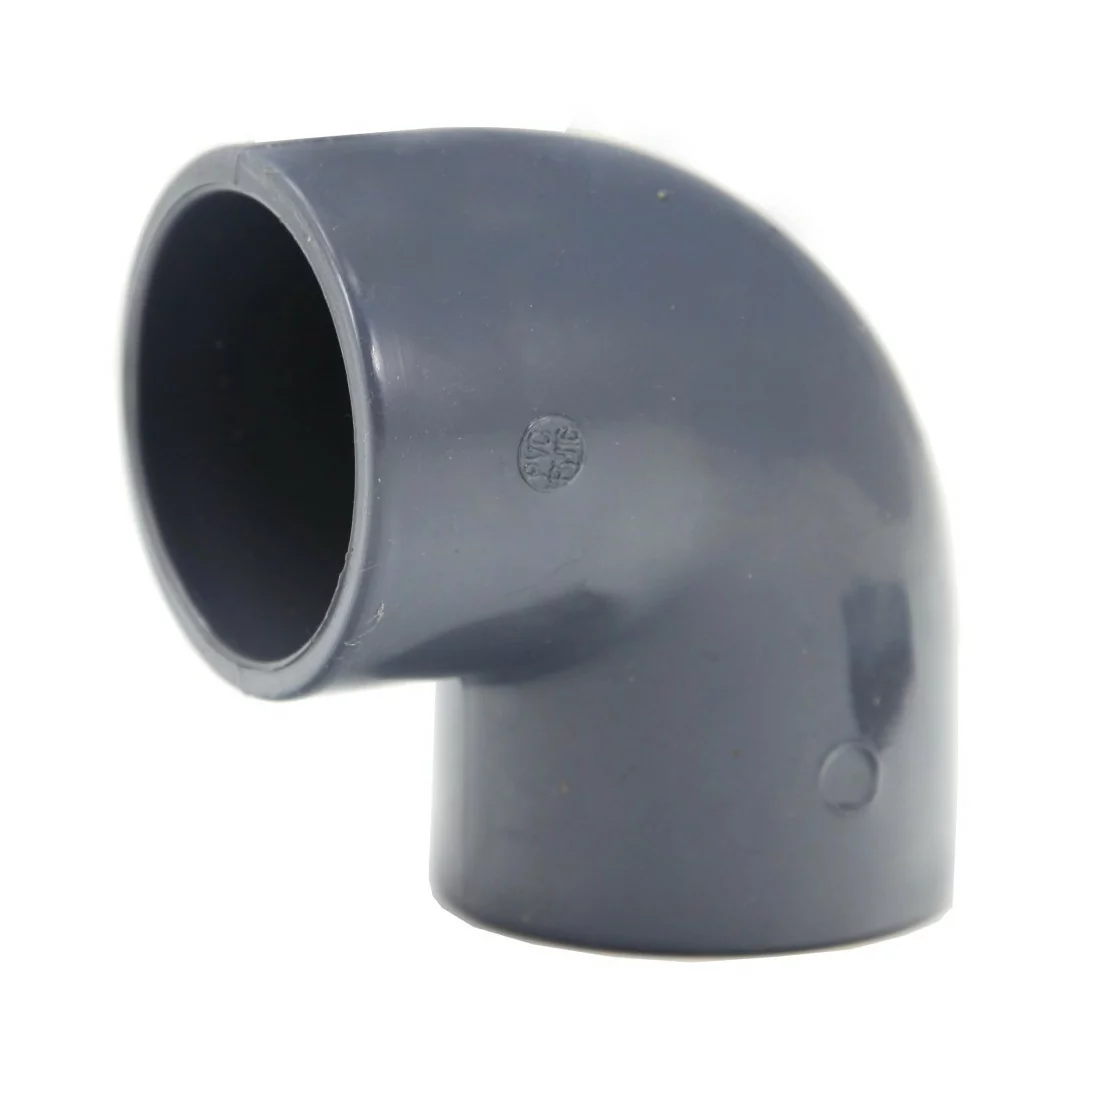 90° elbow pressure PVC 25mm